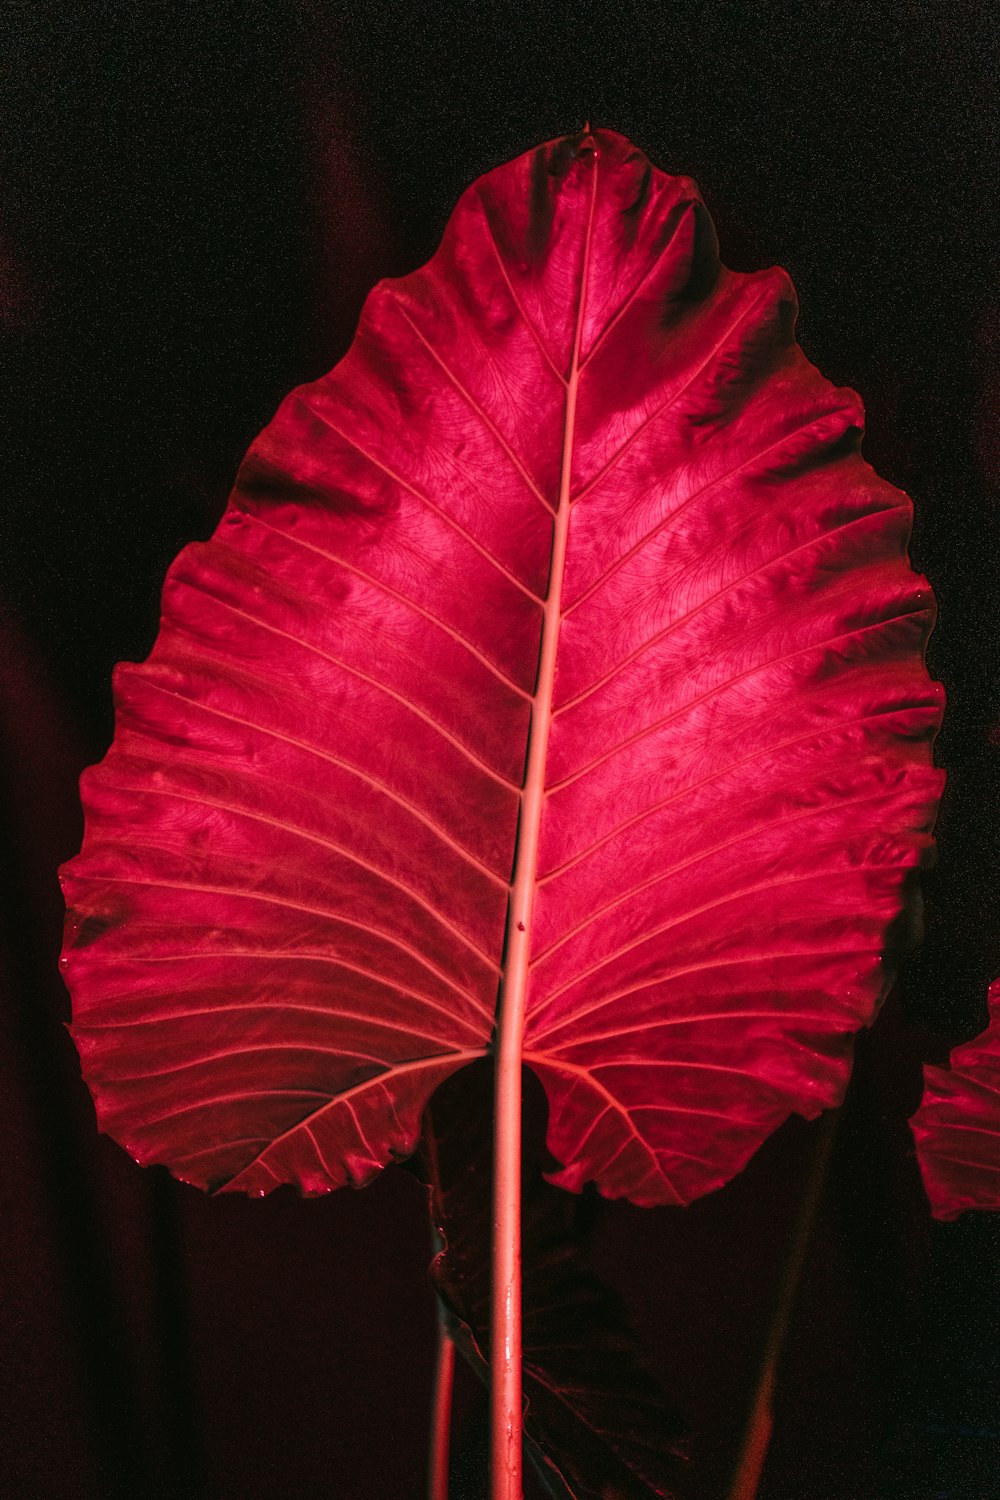 a large red leaf on a dark background